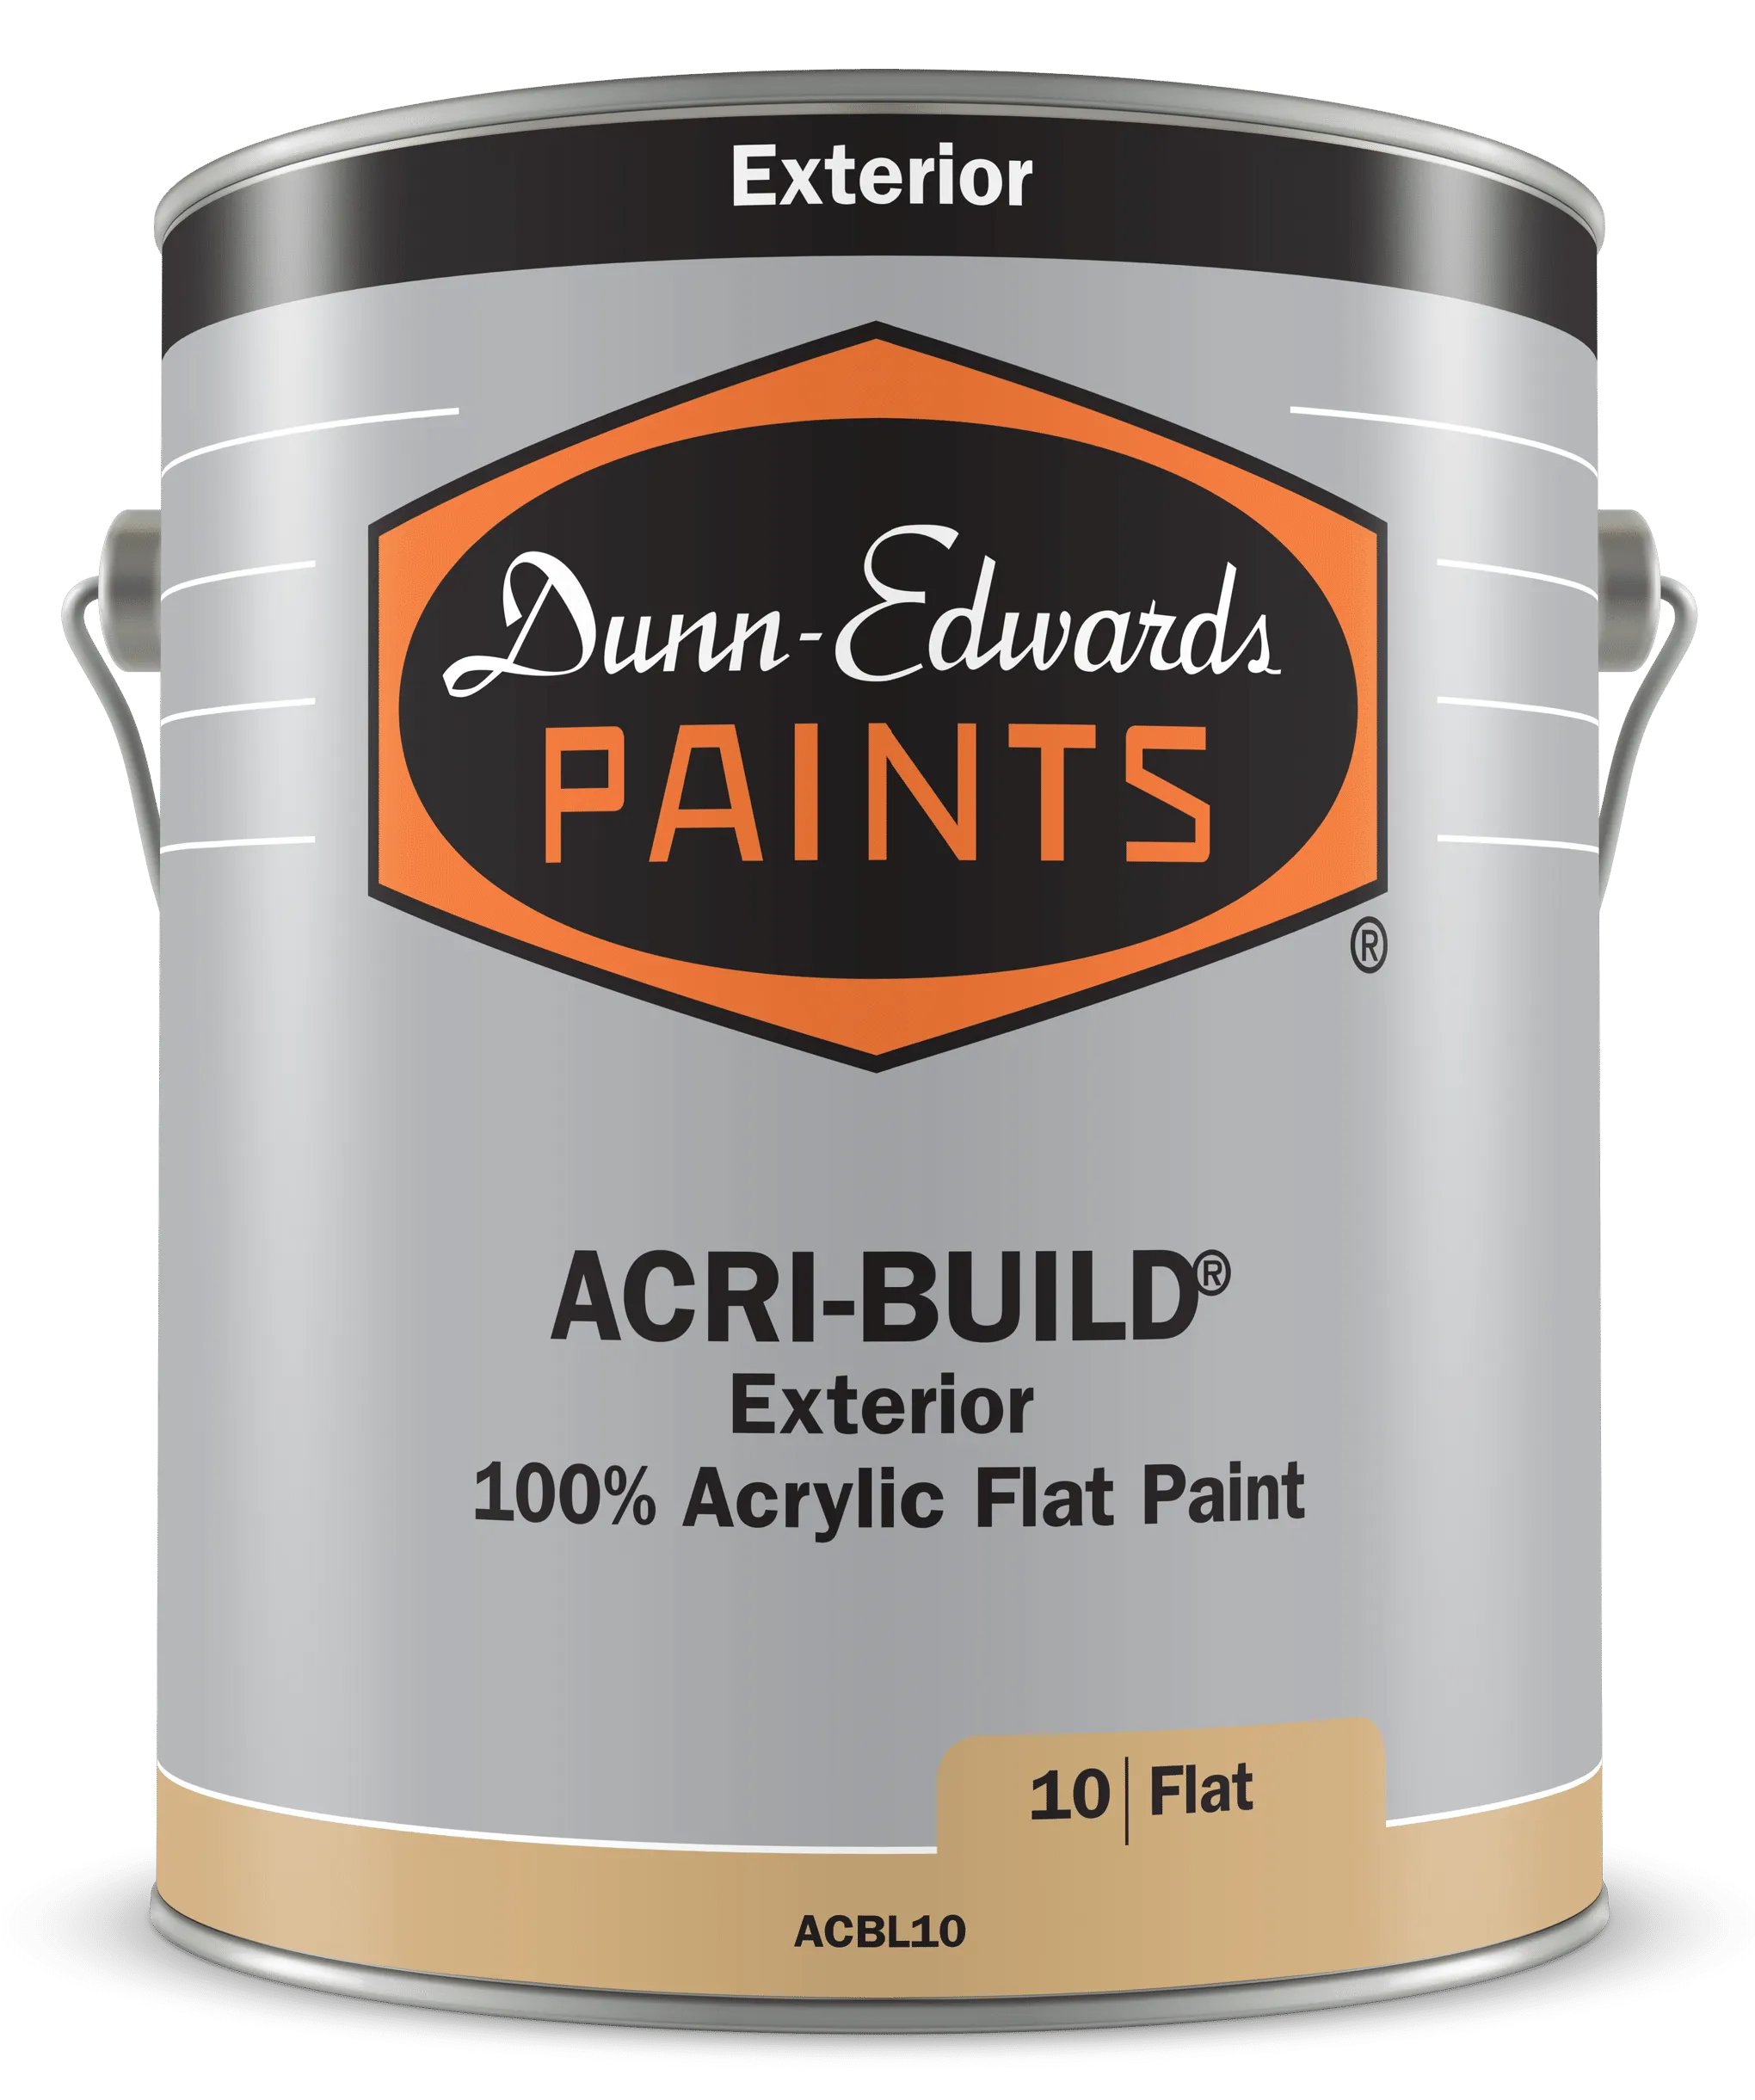 ACRI-BUILD Exterior 100% Acrylic Flat Paint Can